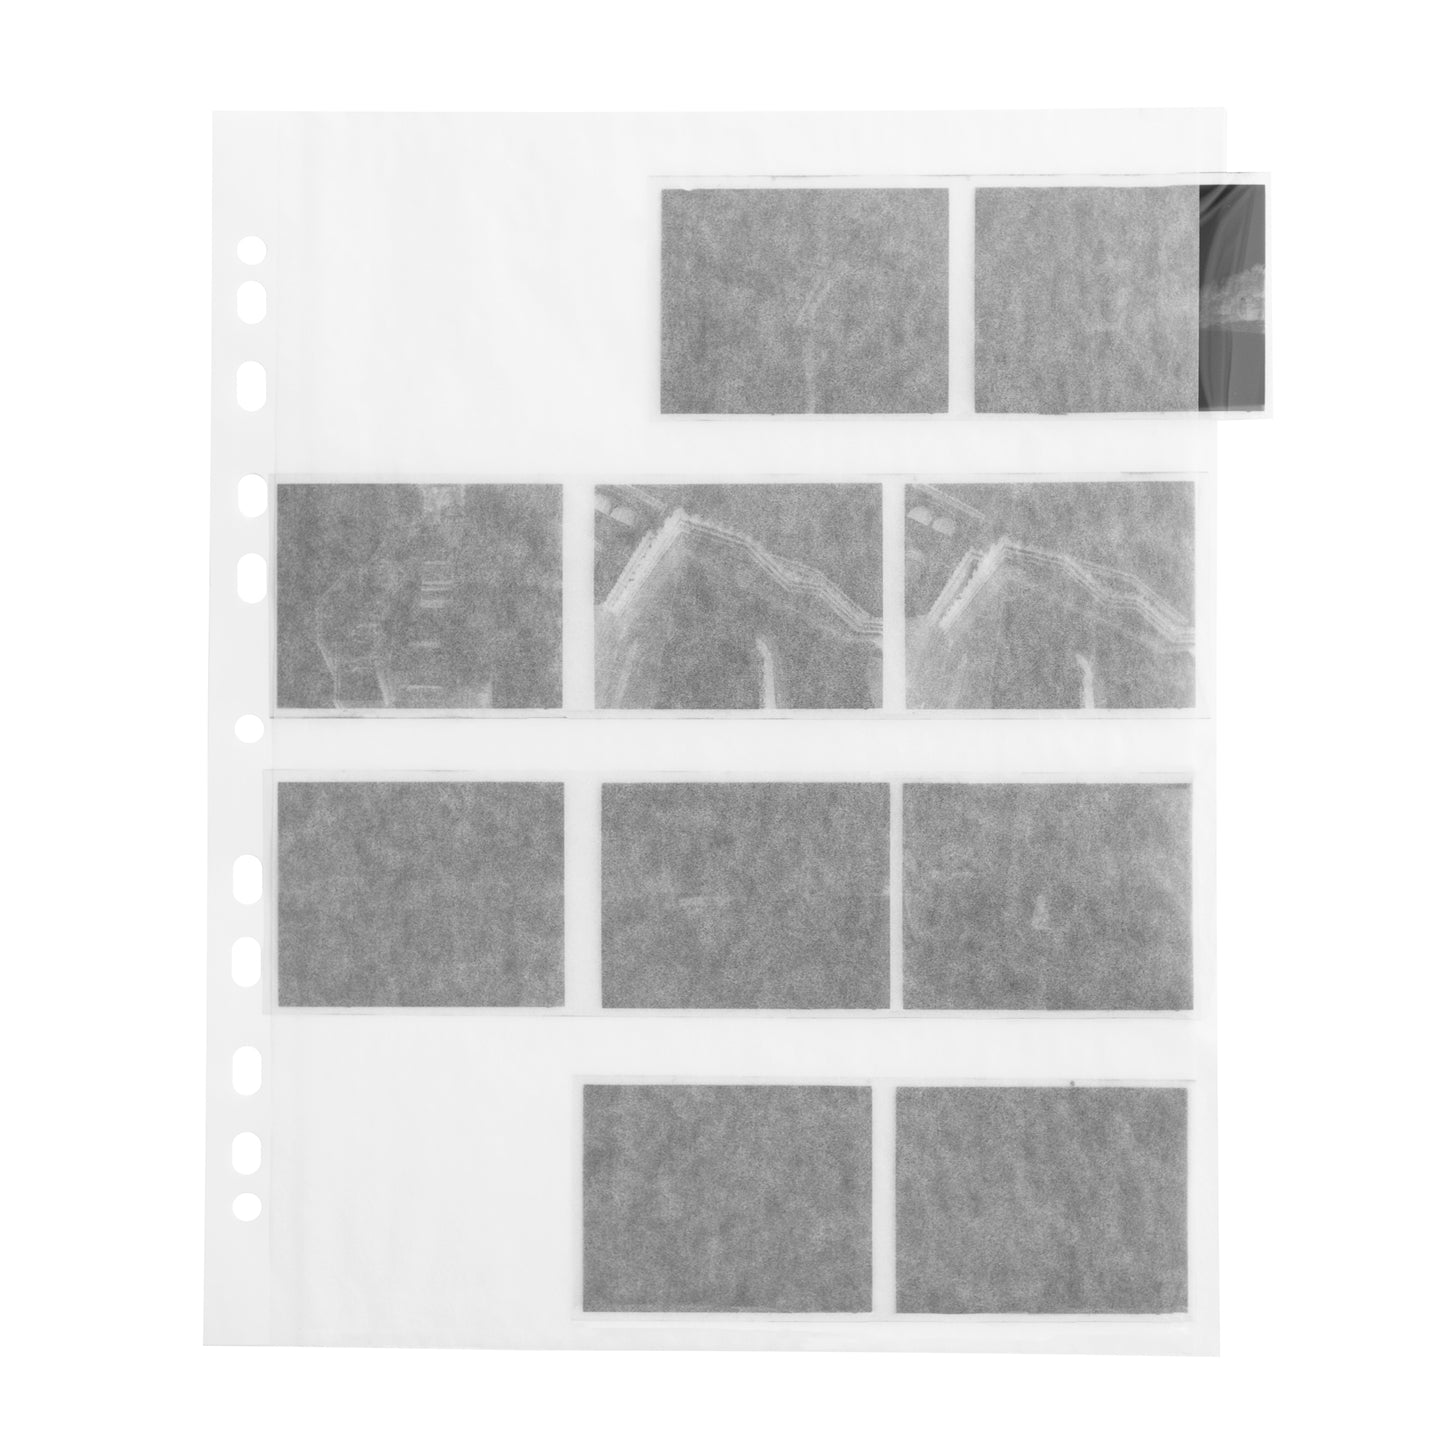 FOTOIMPEX Negative Pages Paper 25 sheets 4 Strips 6x7 6x6 6x9